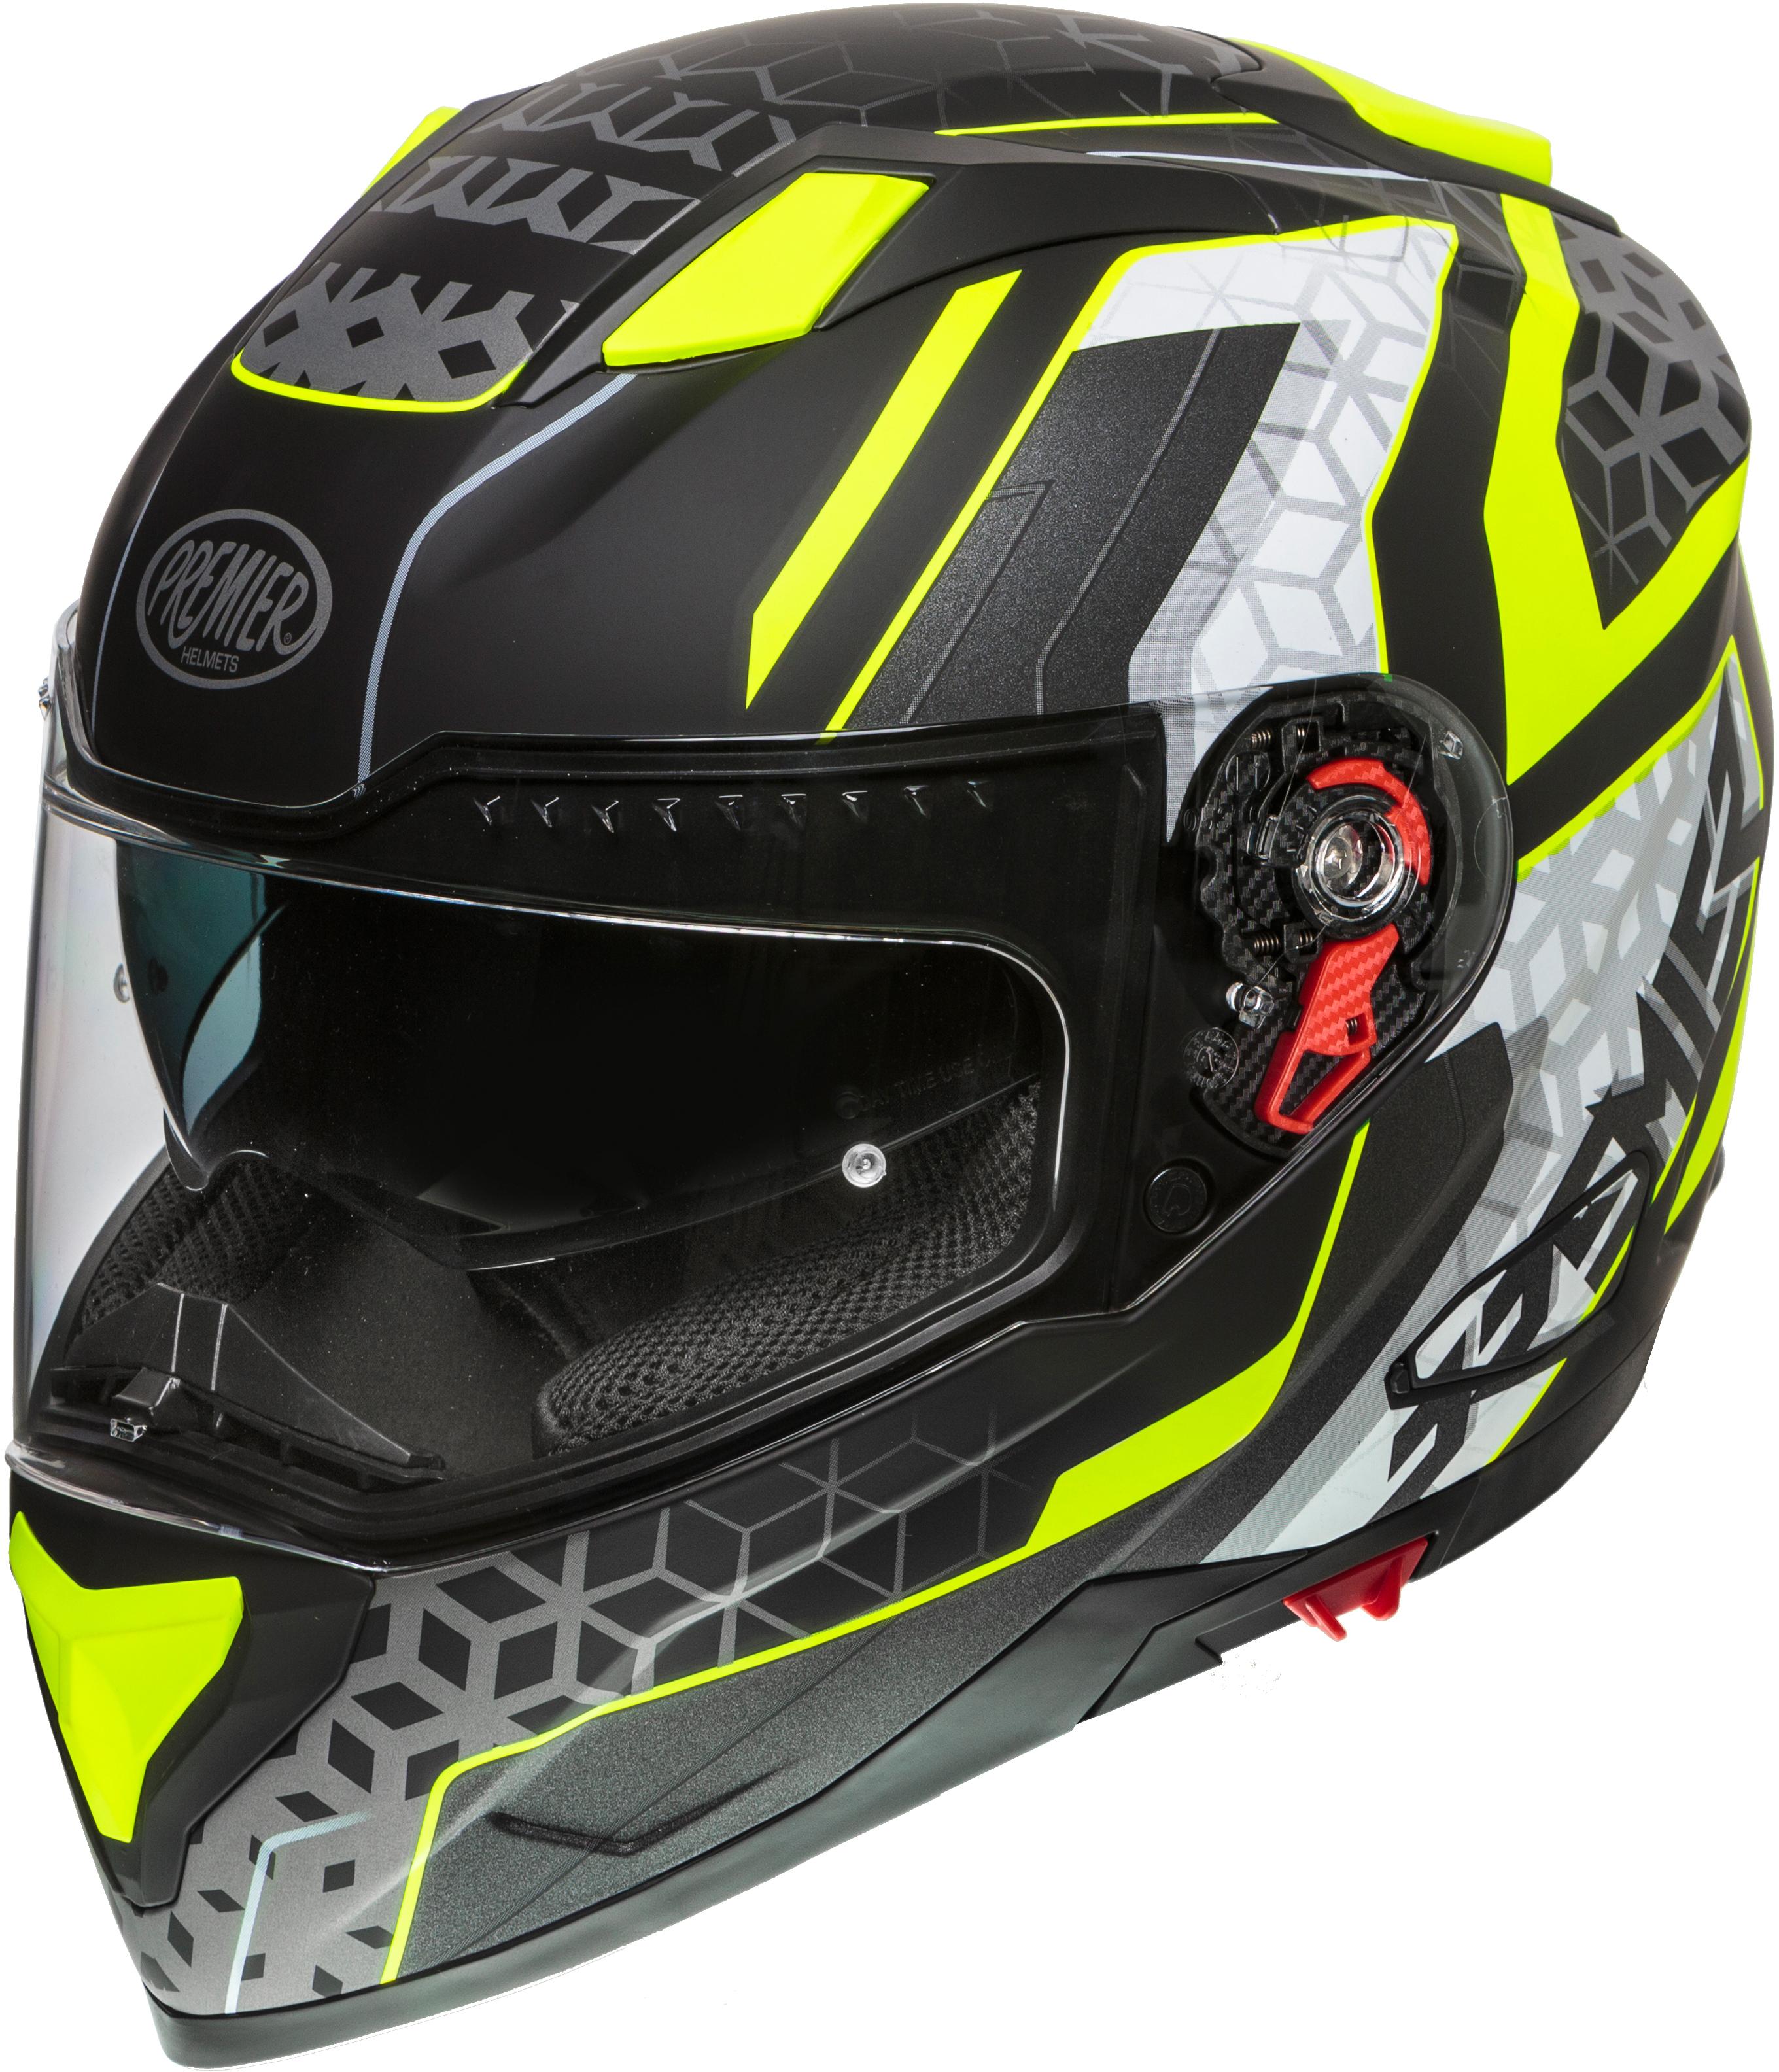 Premier Vyrus Helmet Black/Neon Small